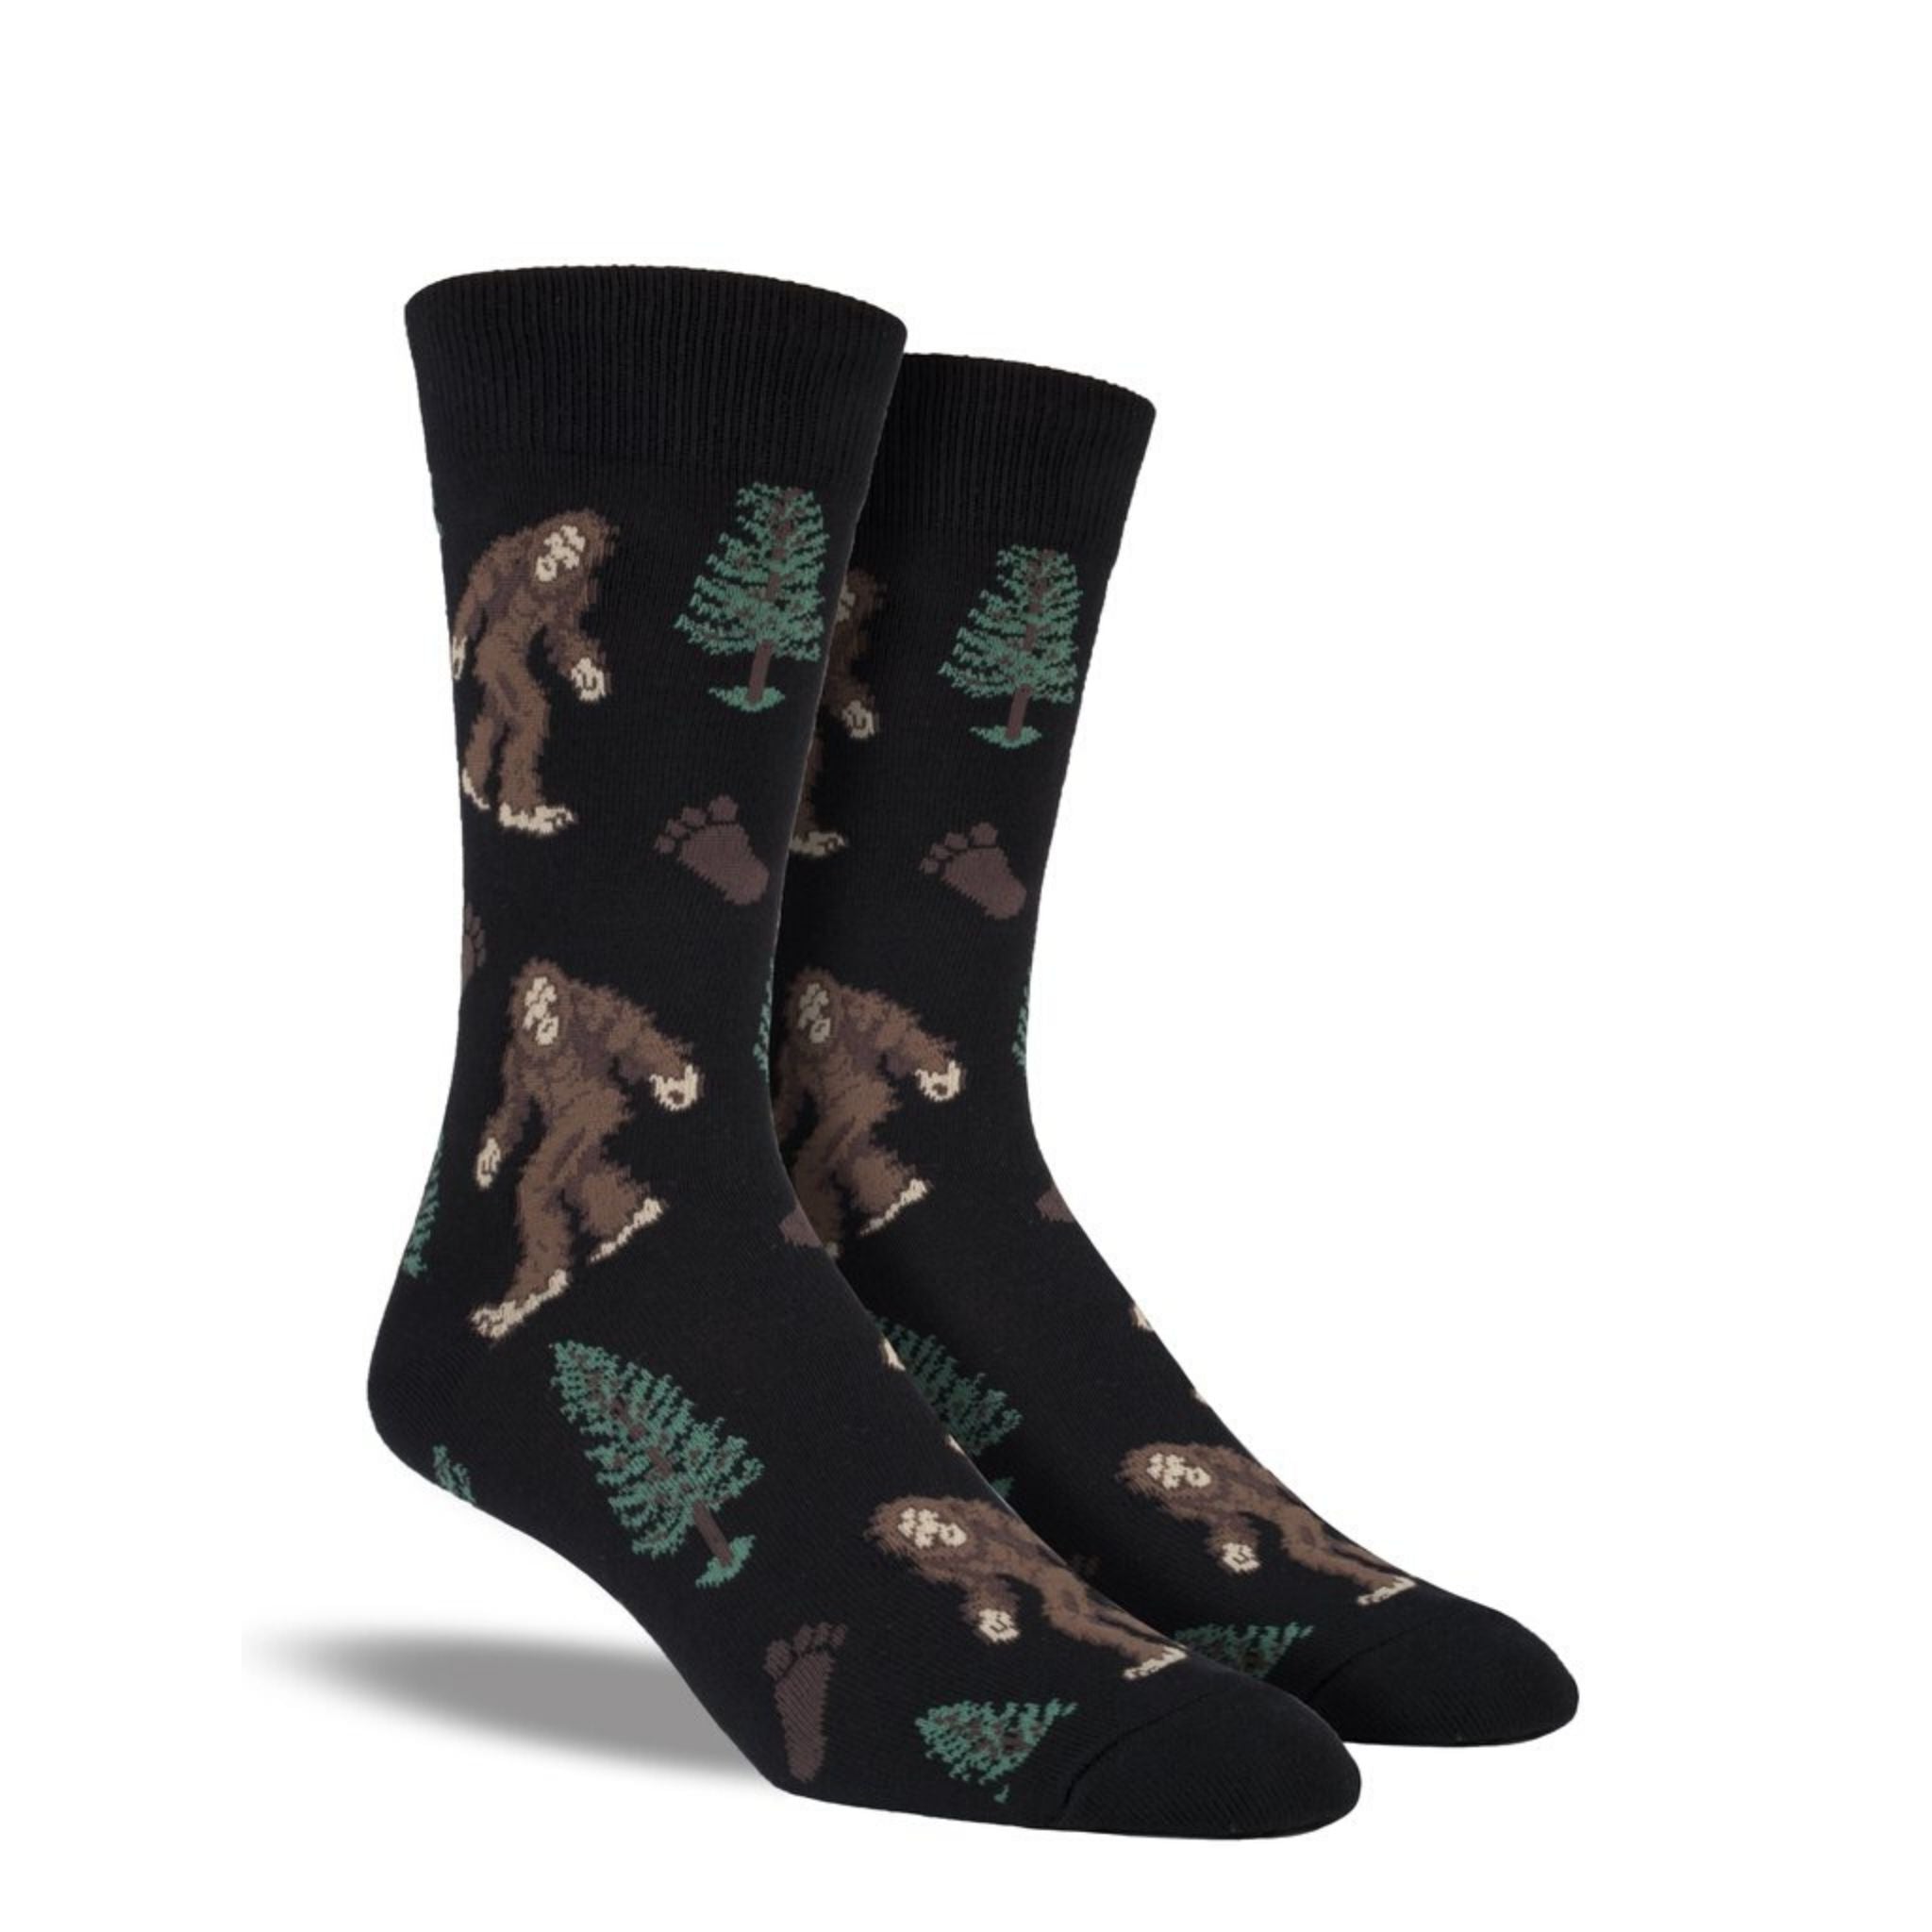 Black socks with Bigfoot and trees